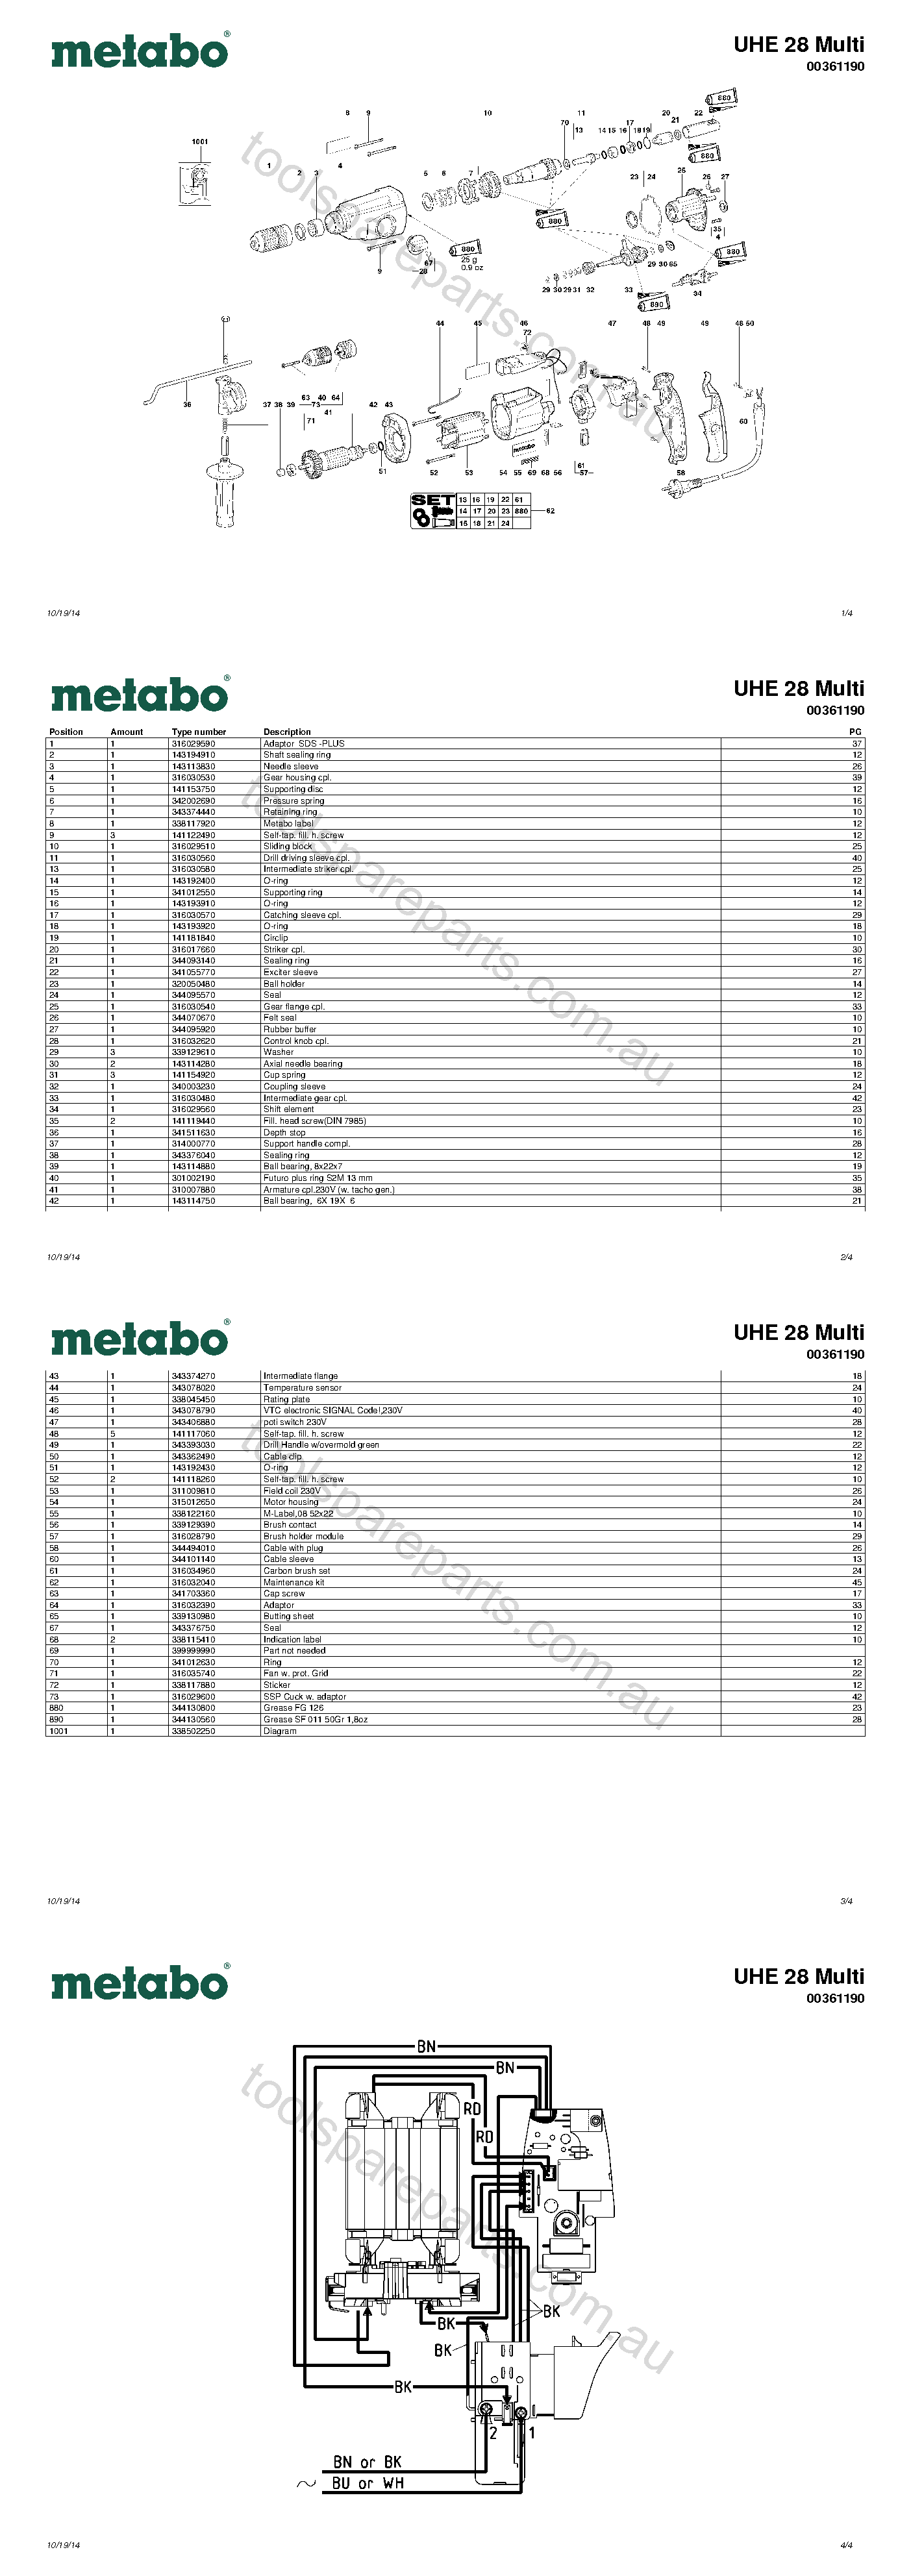 Metabo UHE 28 Multi 00361190  Diagram 1